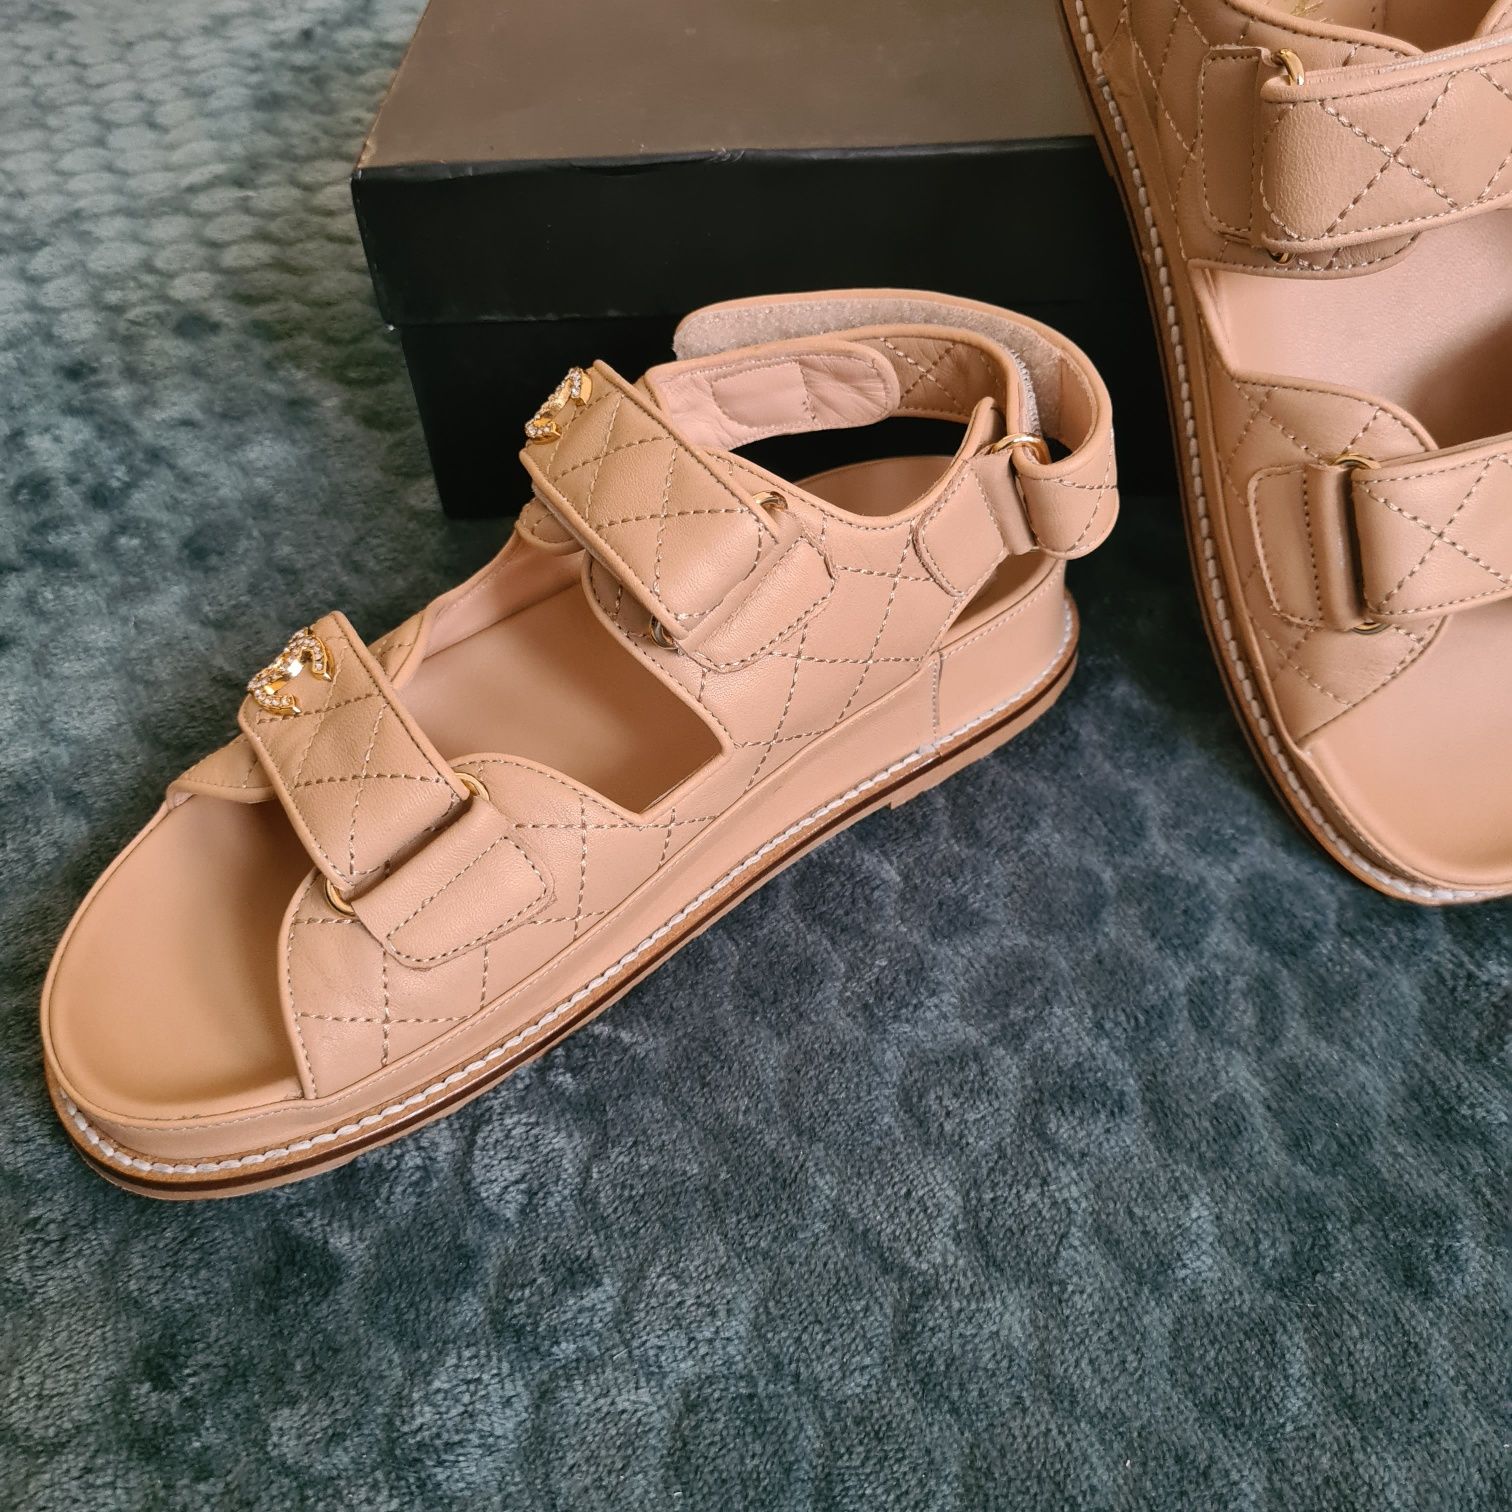 Chanel Dad leather sandals -size 36, piele naturala, cutie